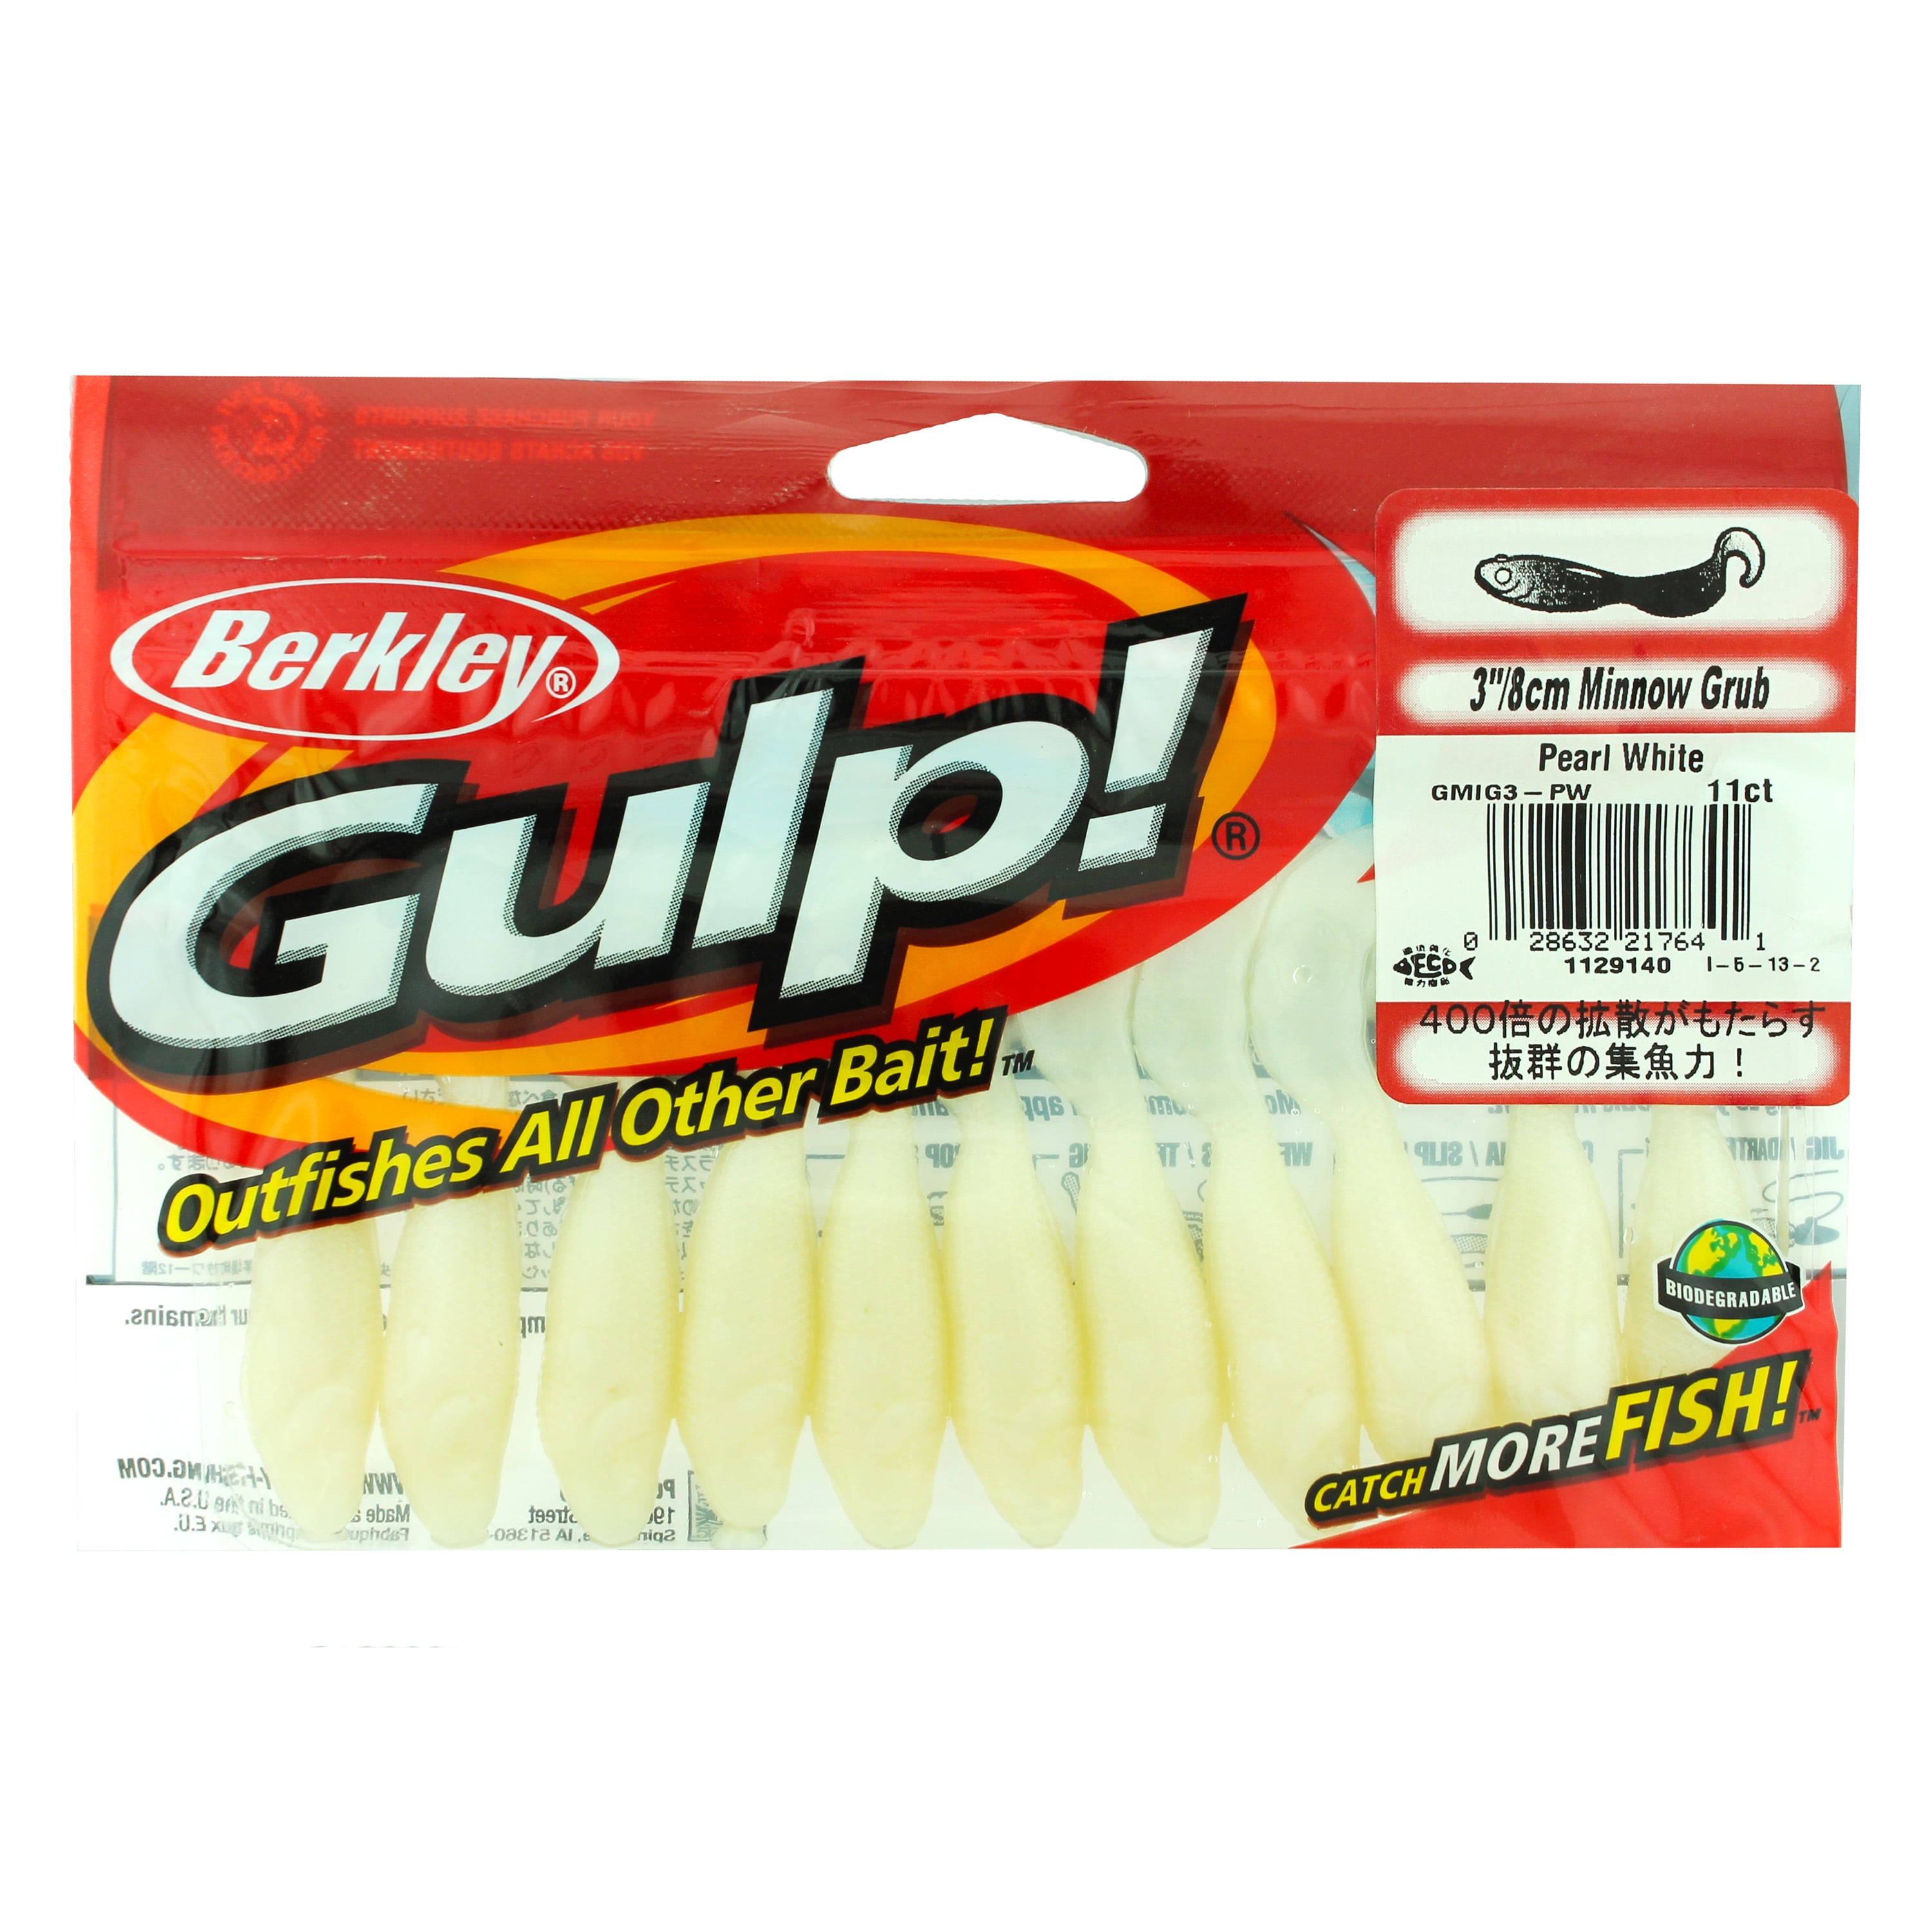 BERKLEY GULP - Pearl White 2" Minnow Grub 20/Ct Pack